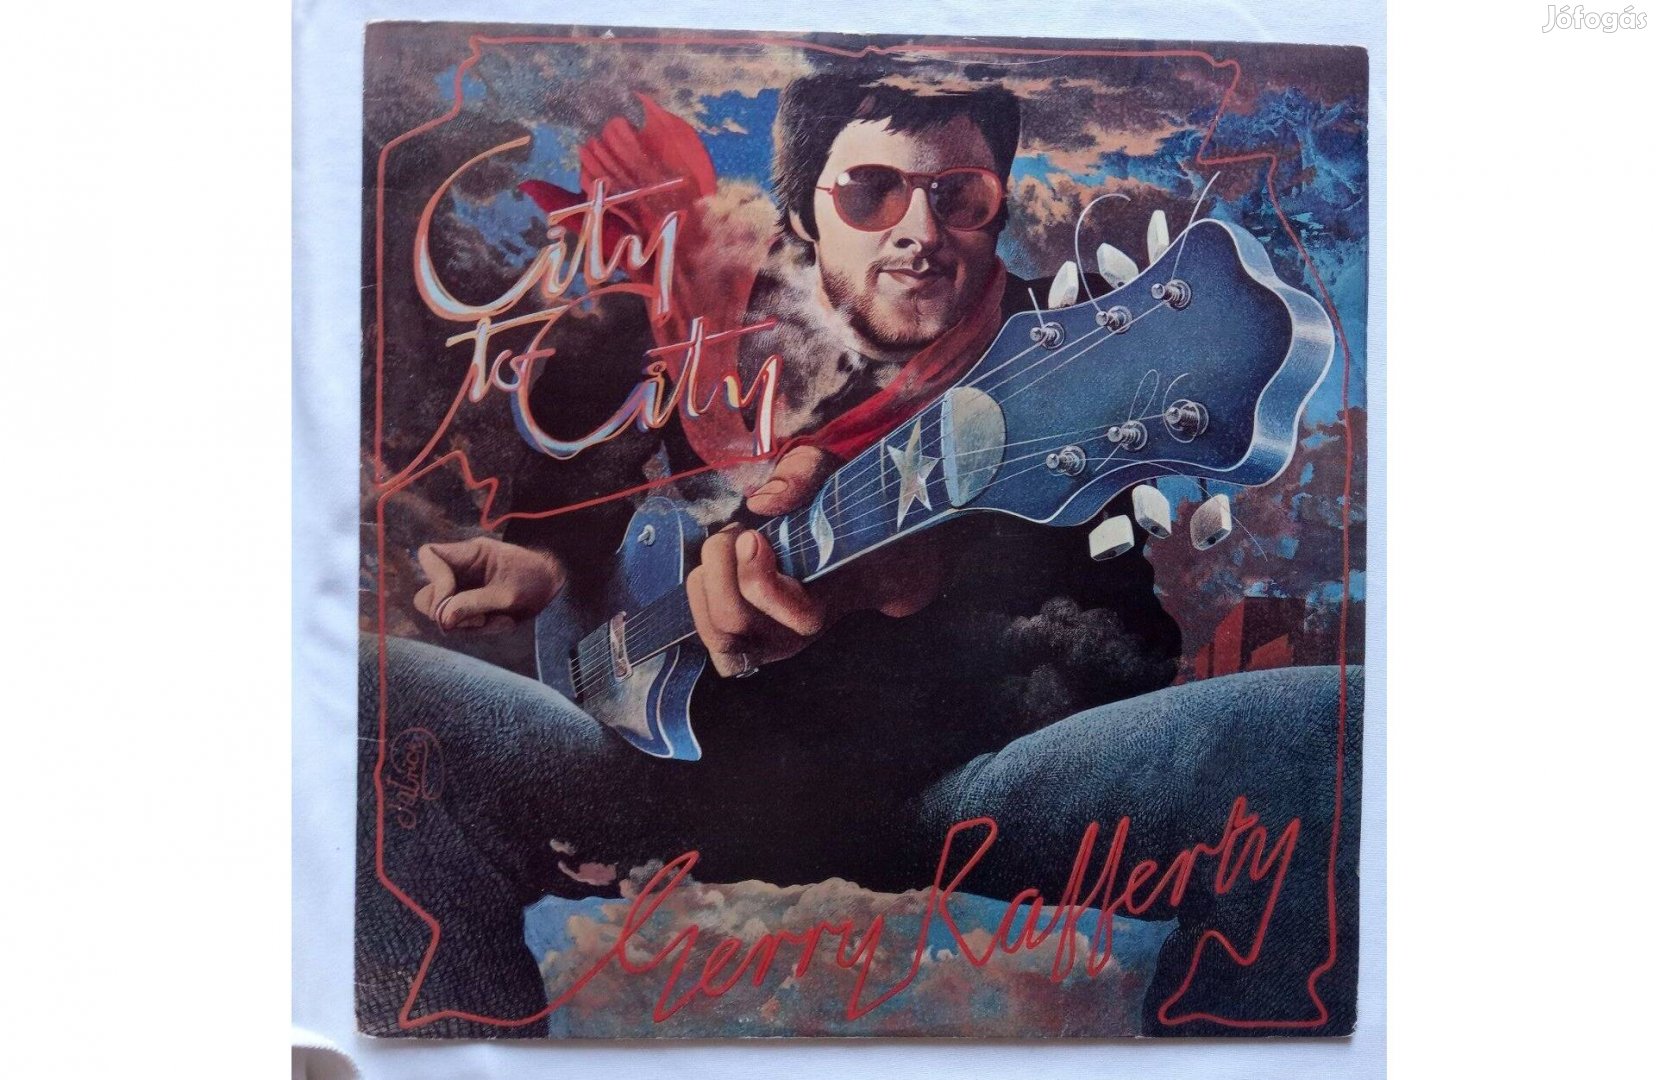 Gerry Rafferty City To City bakelit vinyl lp